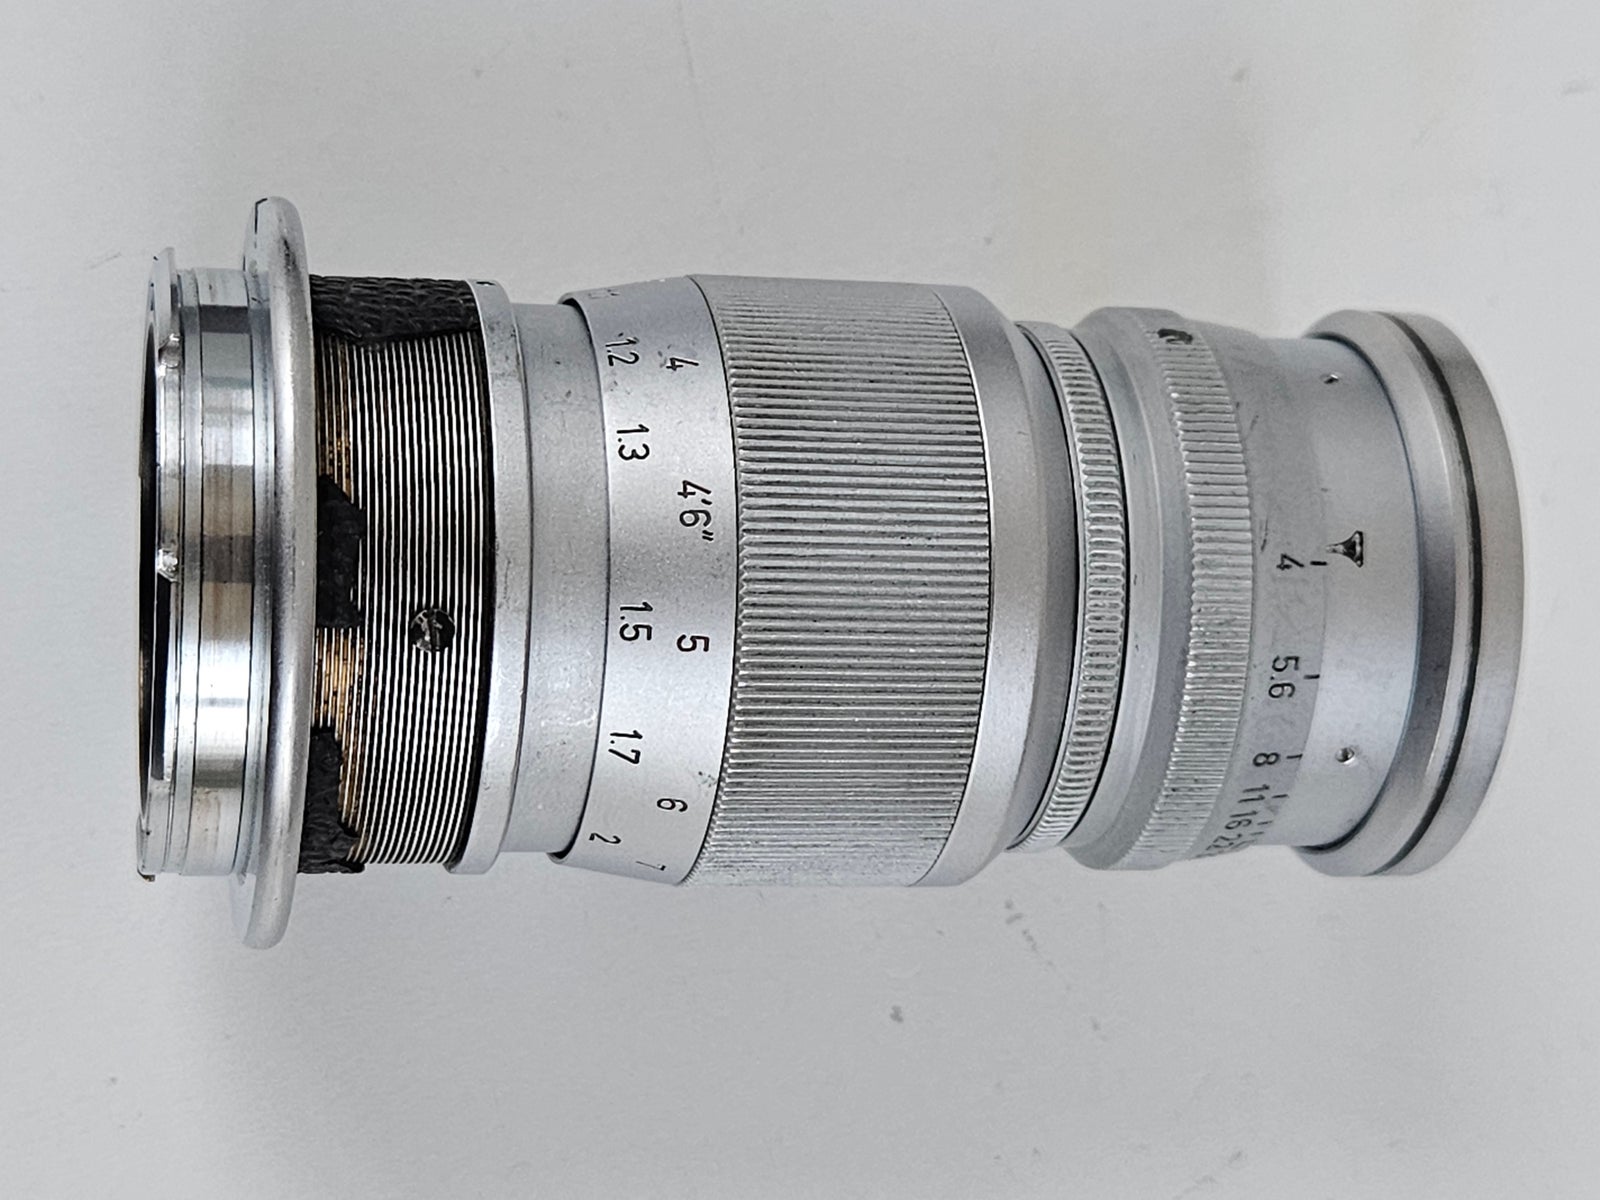 Tele, Leica, Elmar 90/4 M39